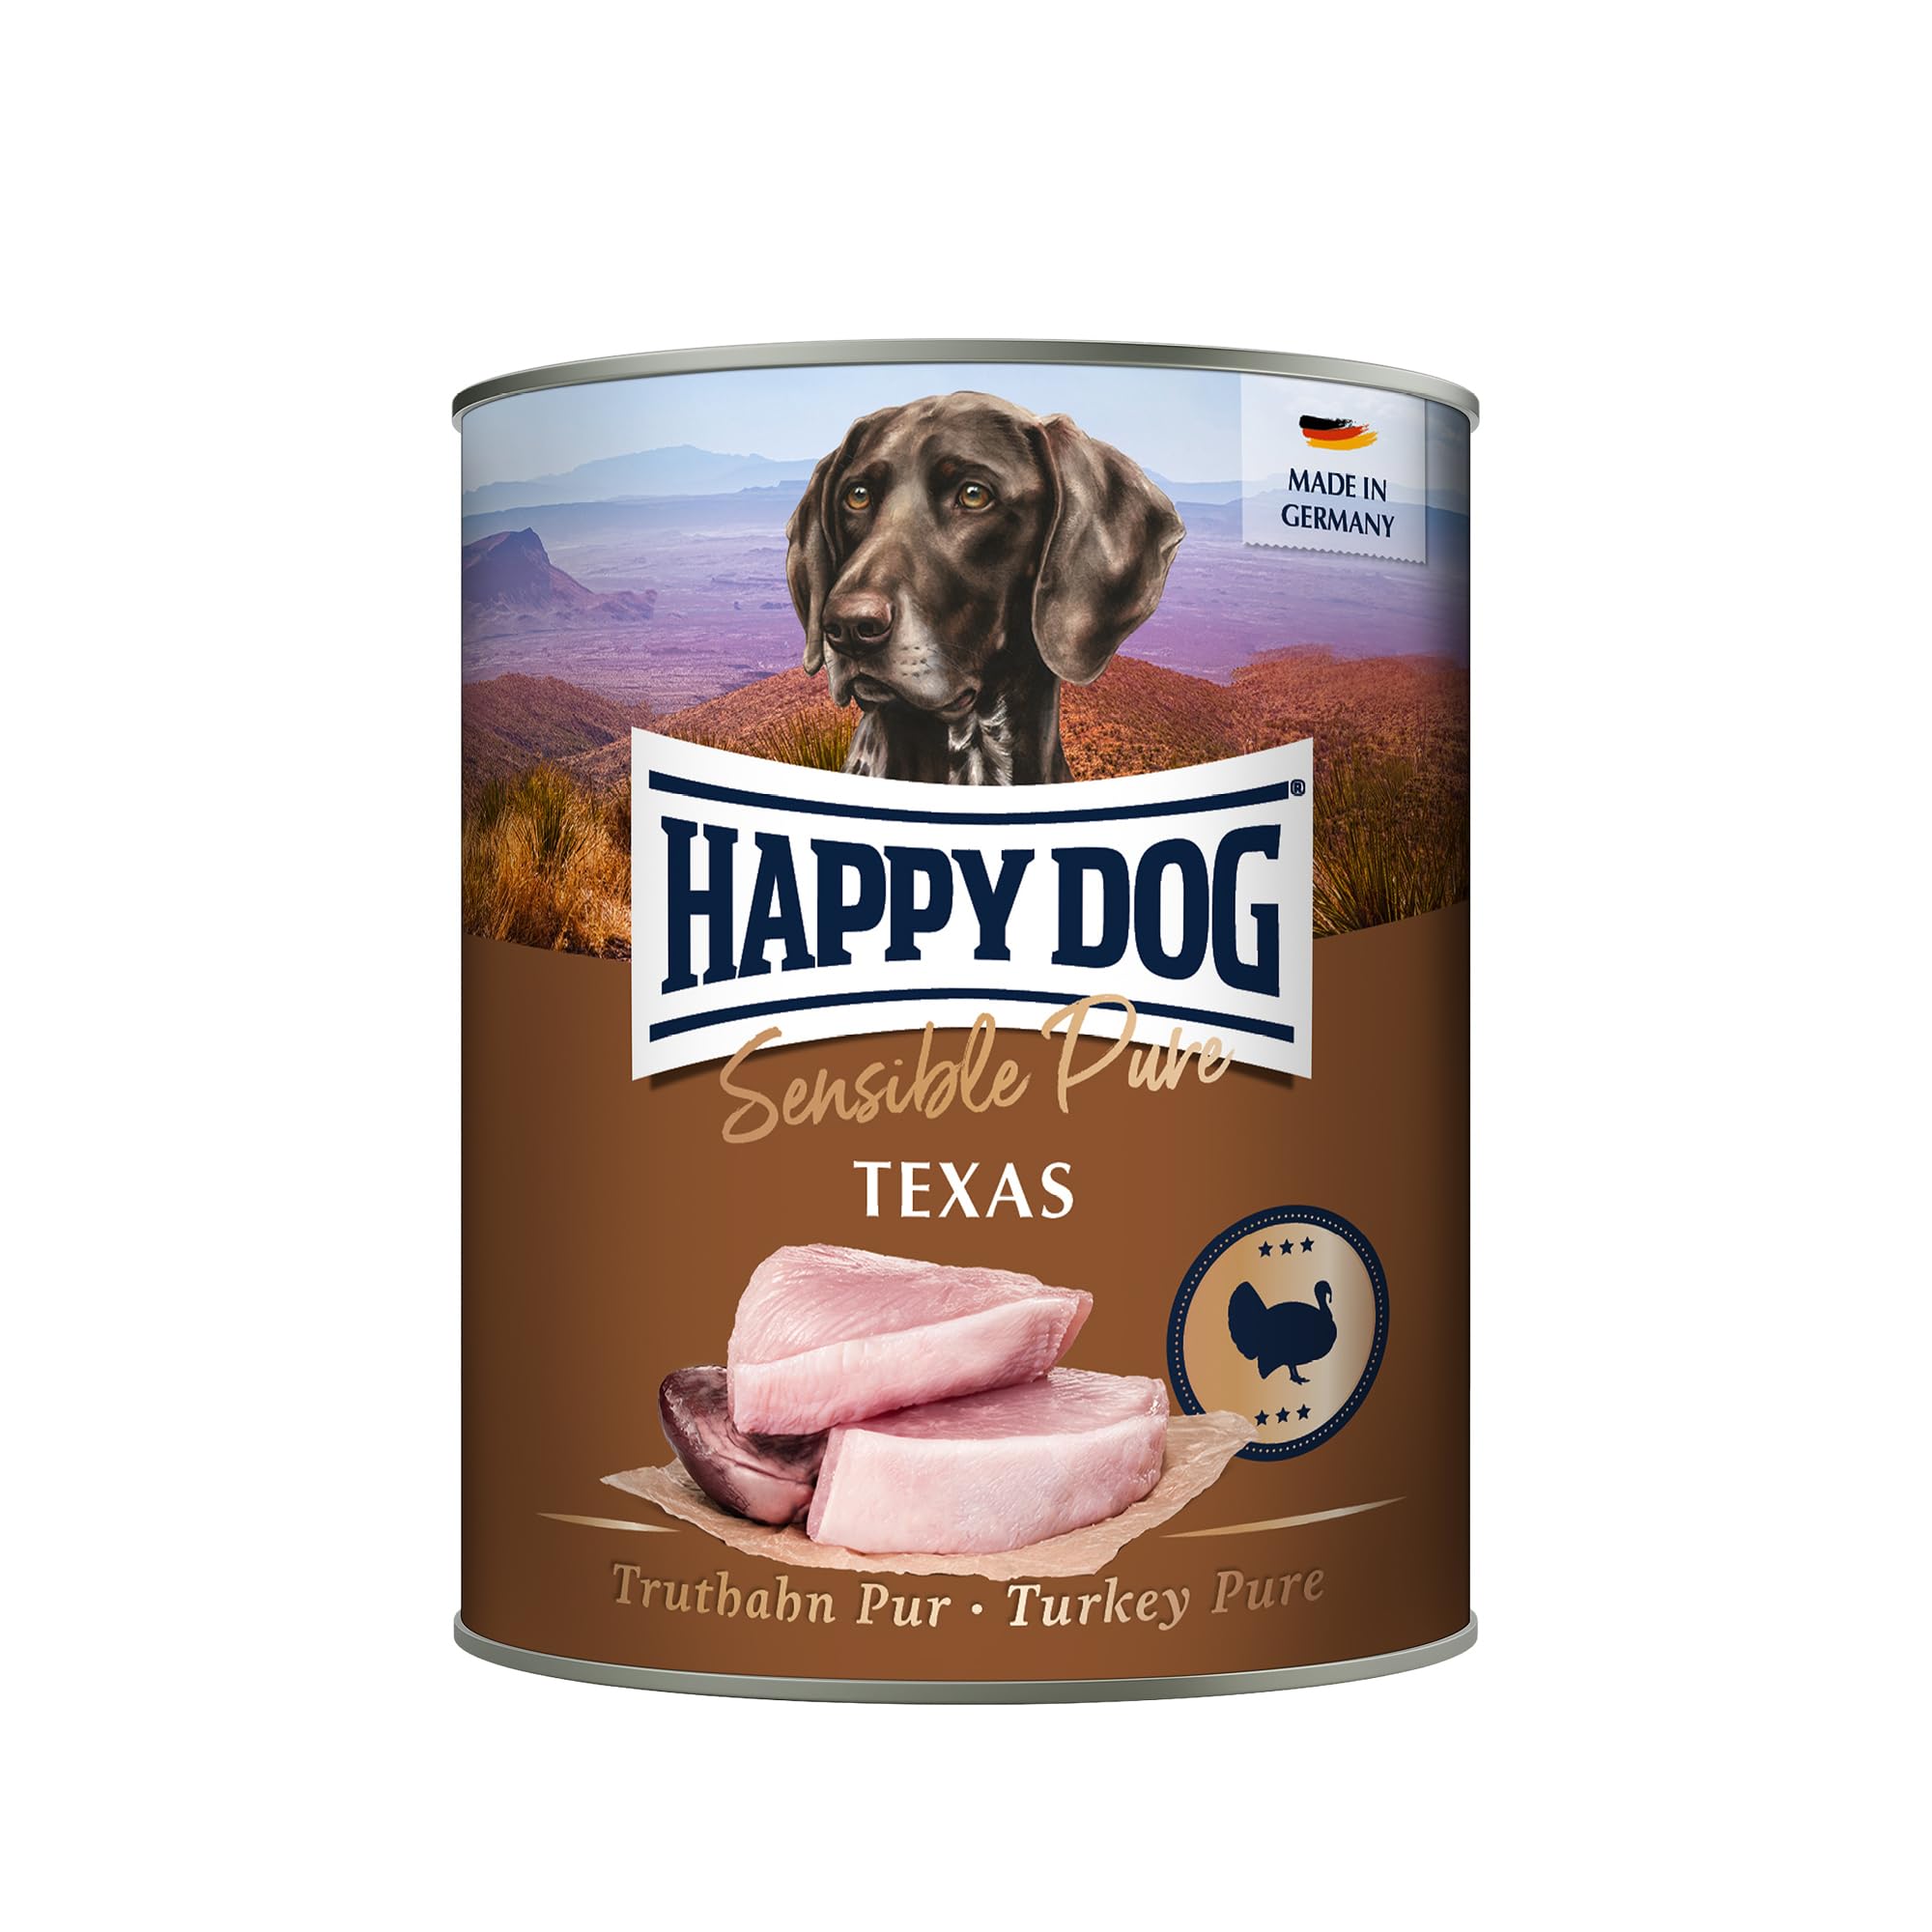 Happy Dog Sensible Pure Texas (Truthahn) 6 x 800 g